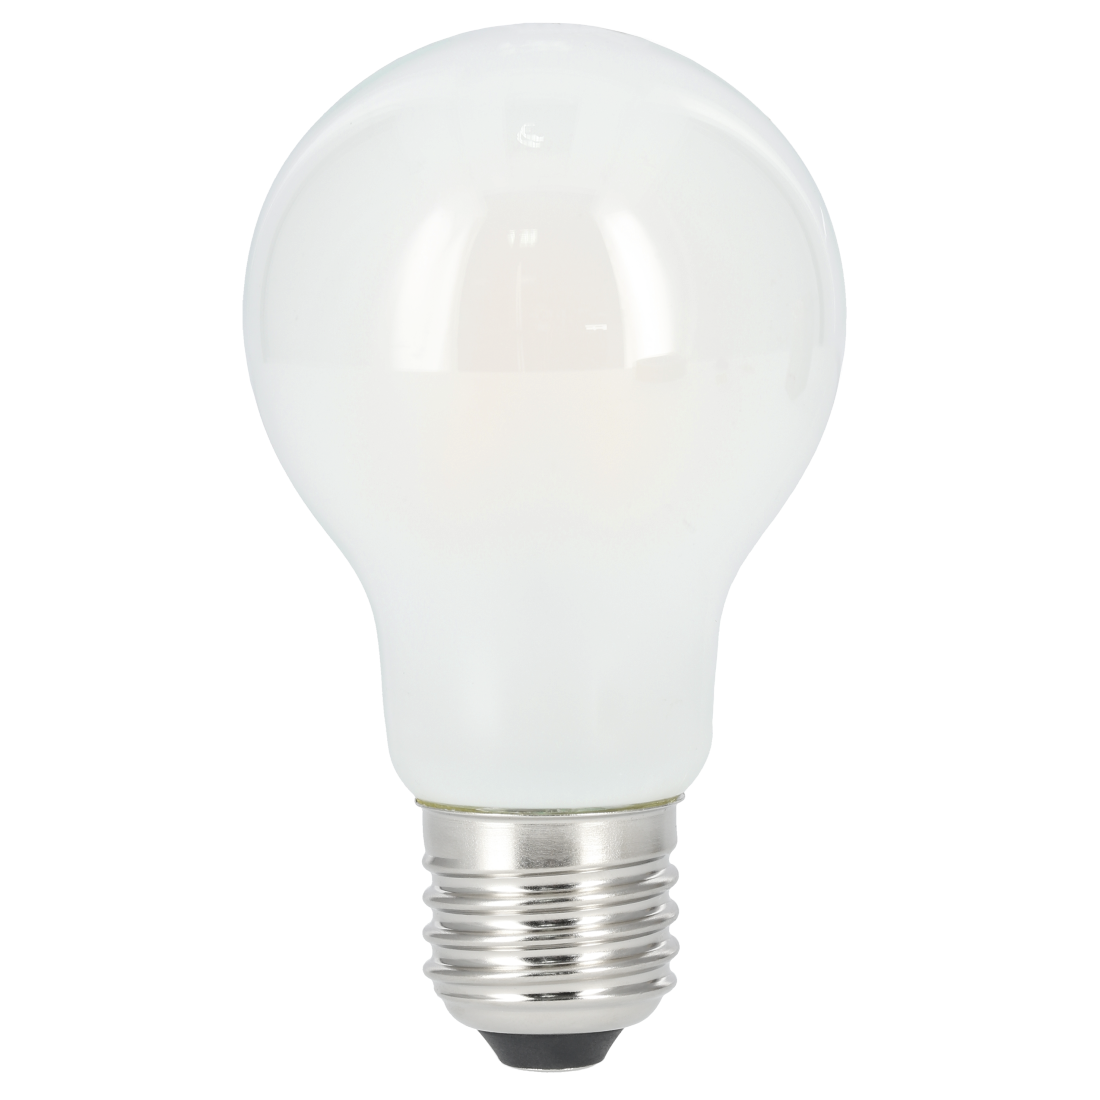 abx High-Res Image - Xavax, Ampoule filament LED, E27, 806lm remp. 60W, amp. incan., mate, blc chd